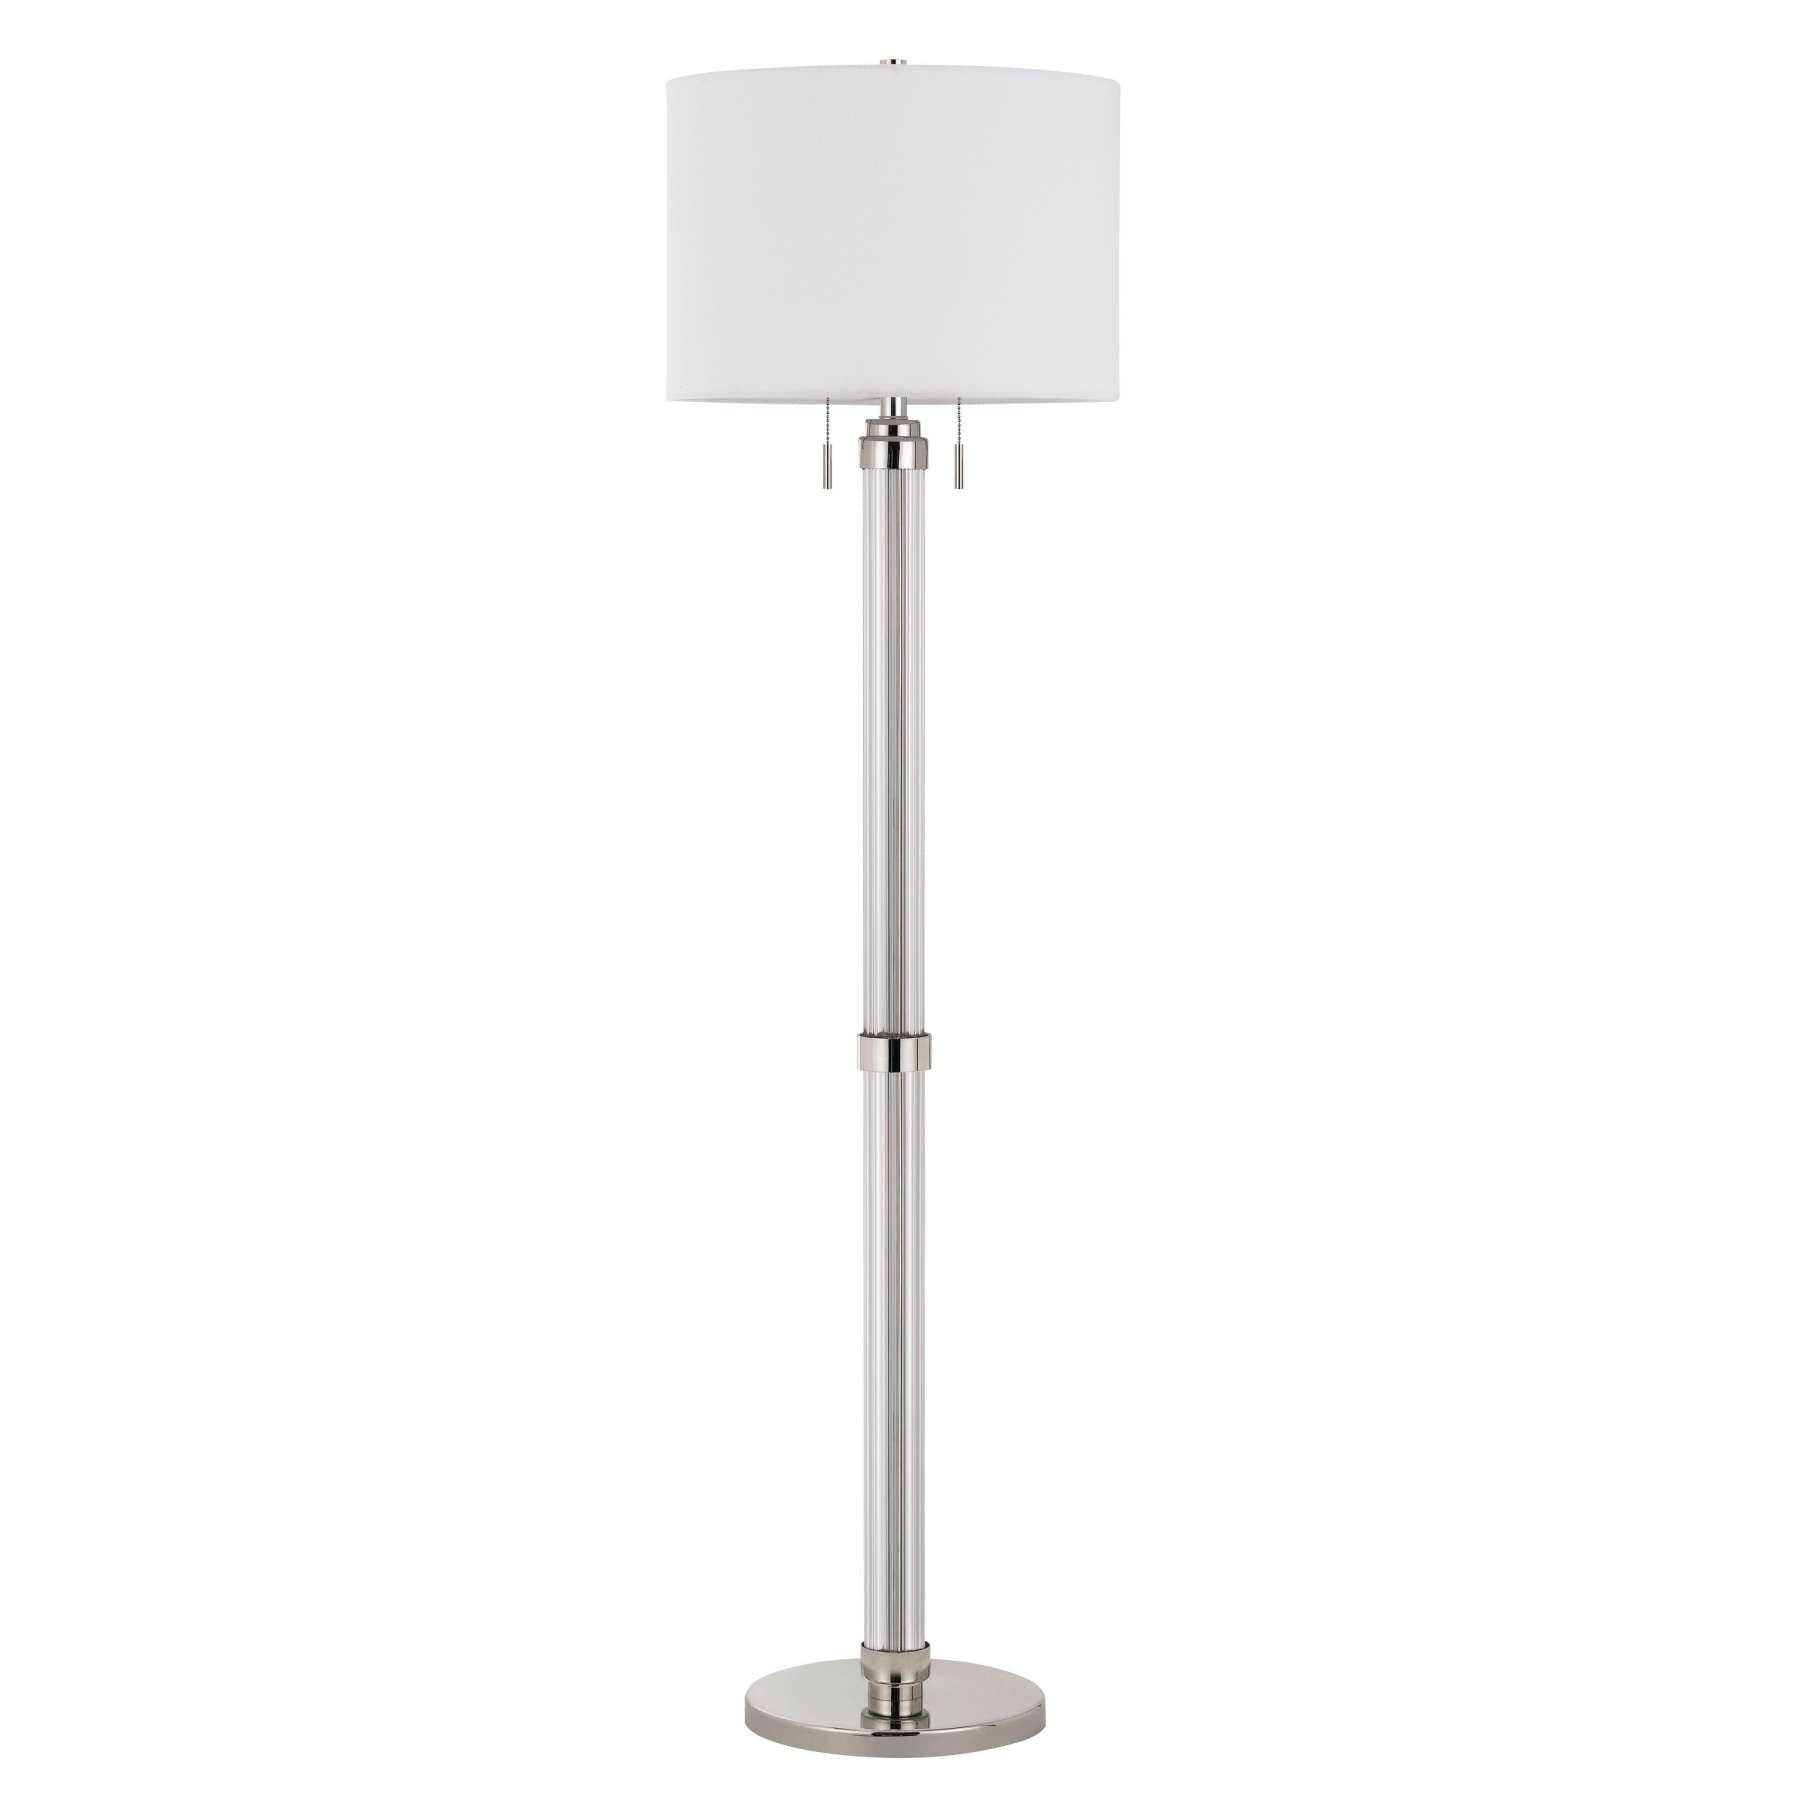 Benzara Metal And Acrylic Tubular Body Floor Lamp With Fabric Drum Shade, White By Benzara Floor Lamps BM224988